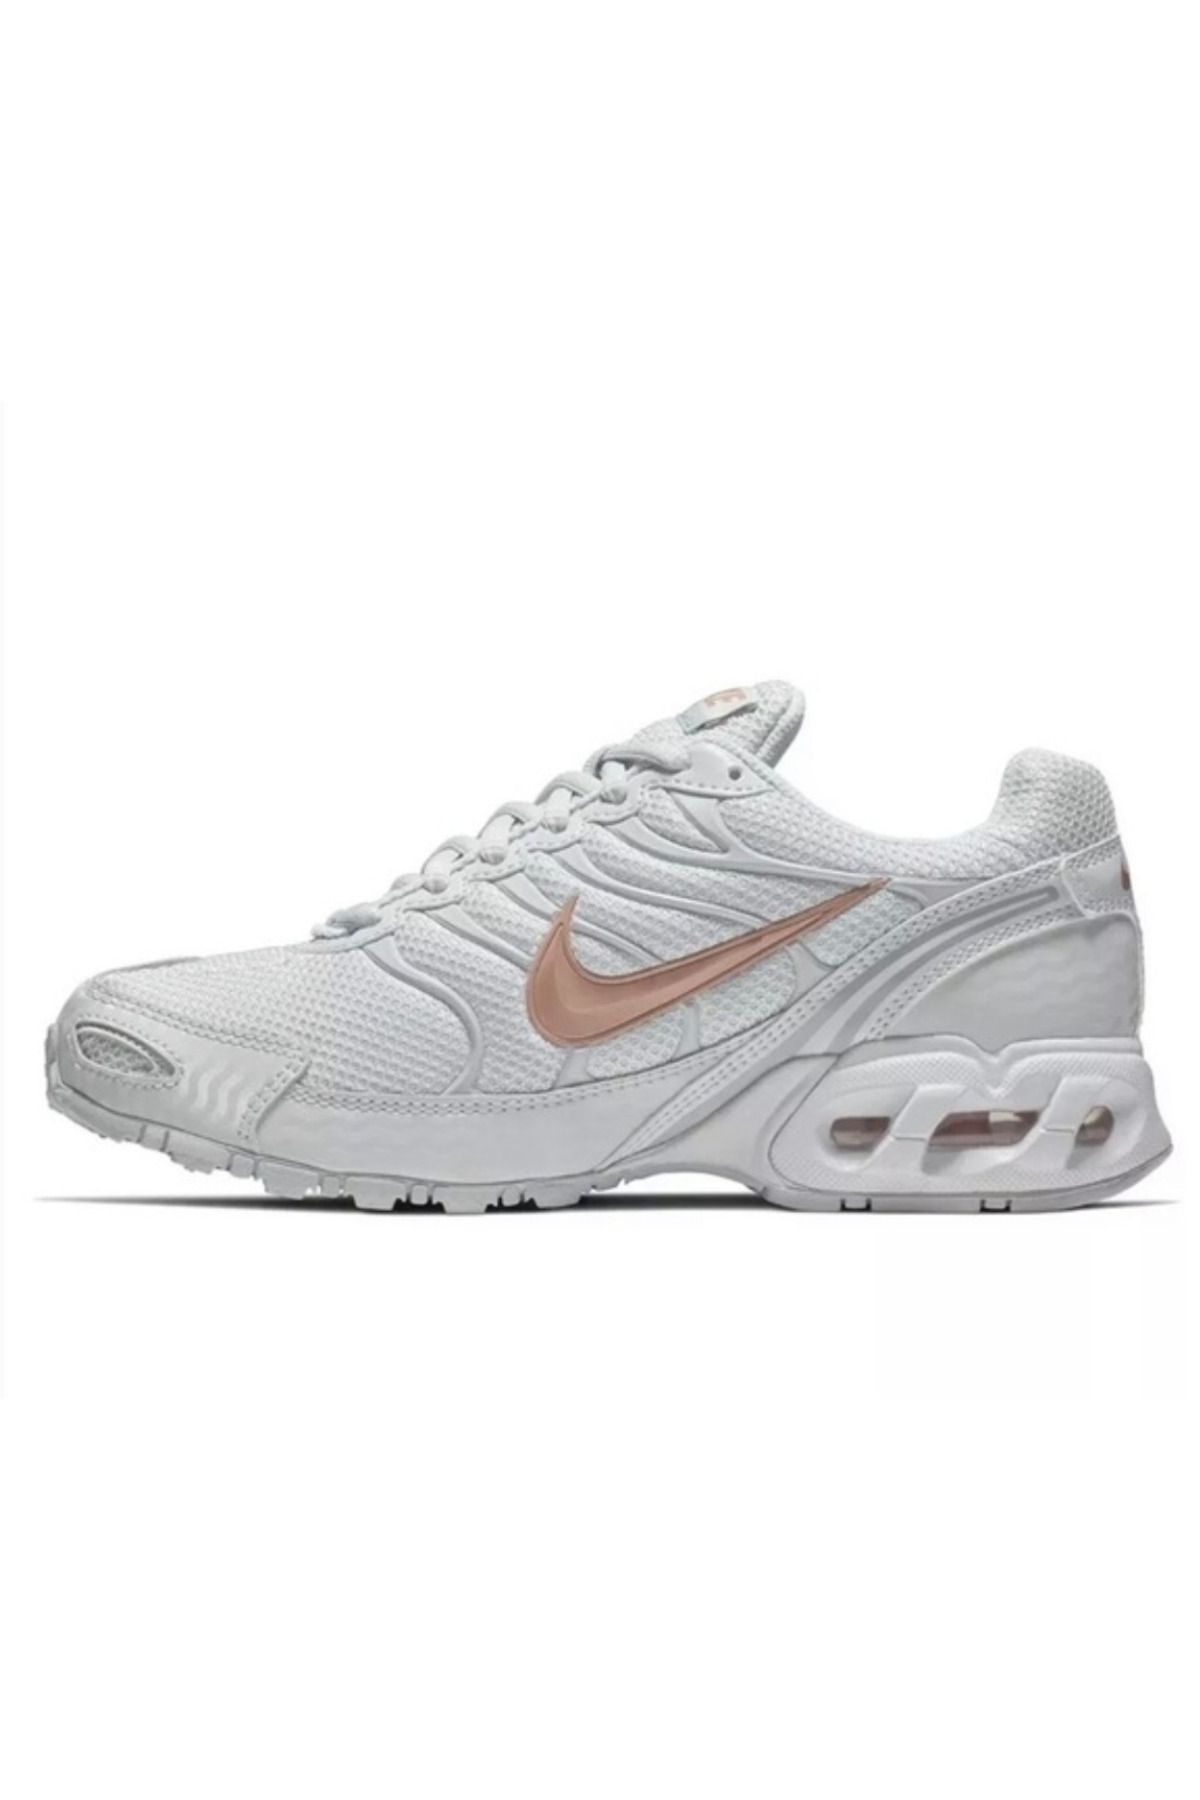 Nike Air Max Torch 4 Platinum White Rose Gold Women Sneaker Shoes 343851-008